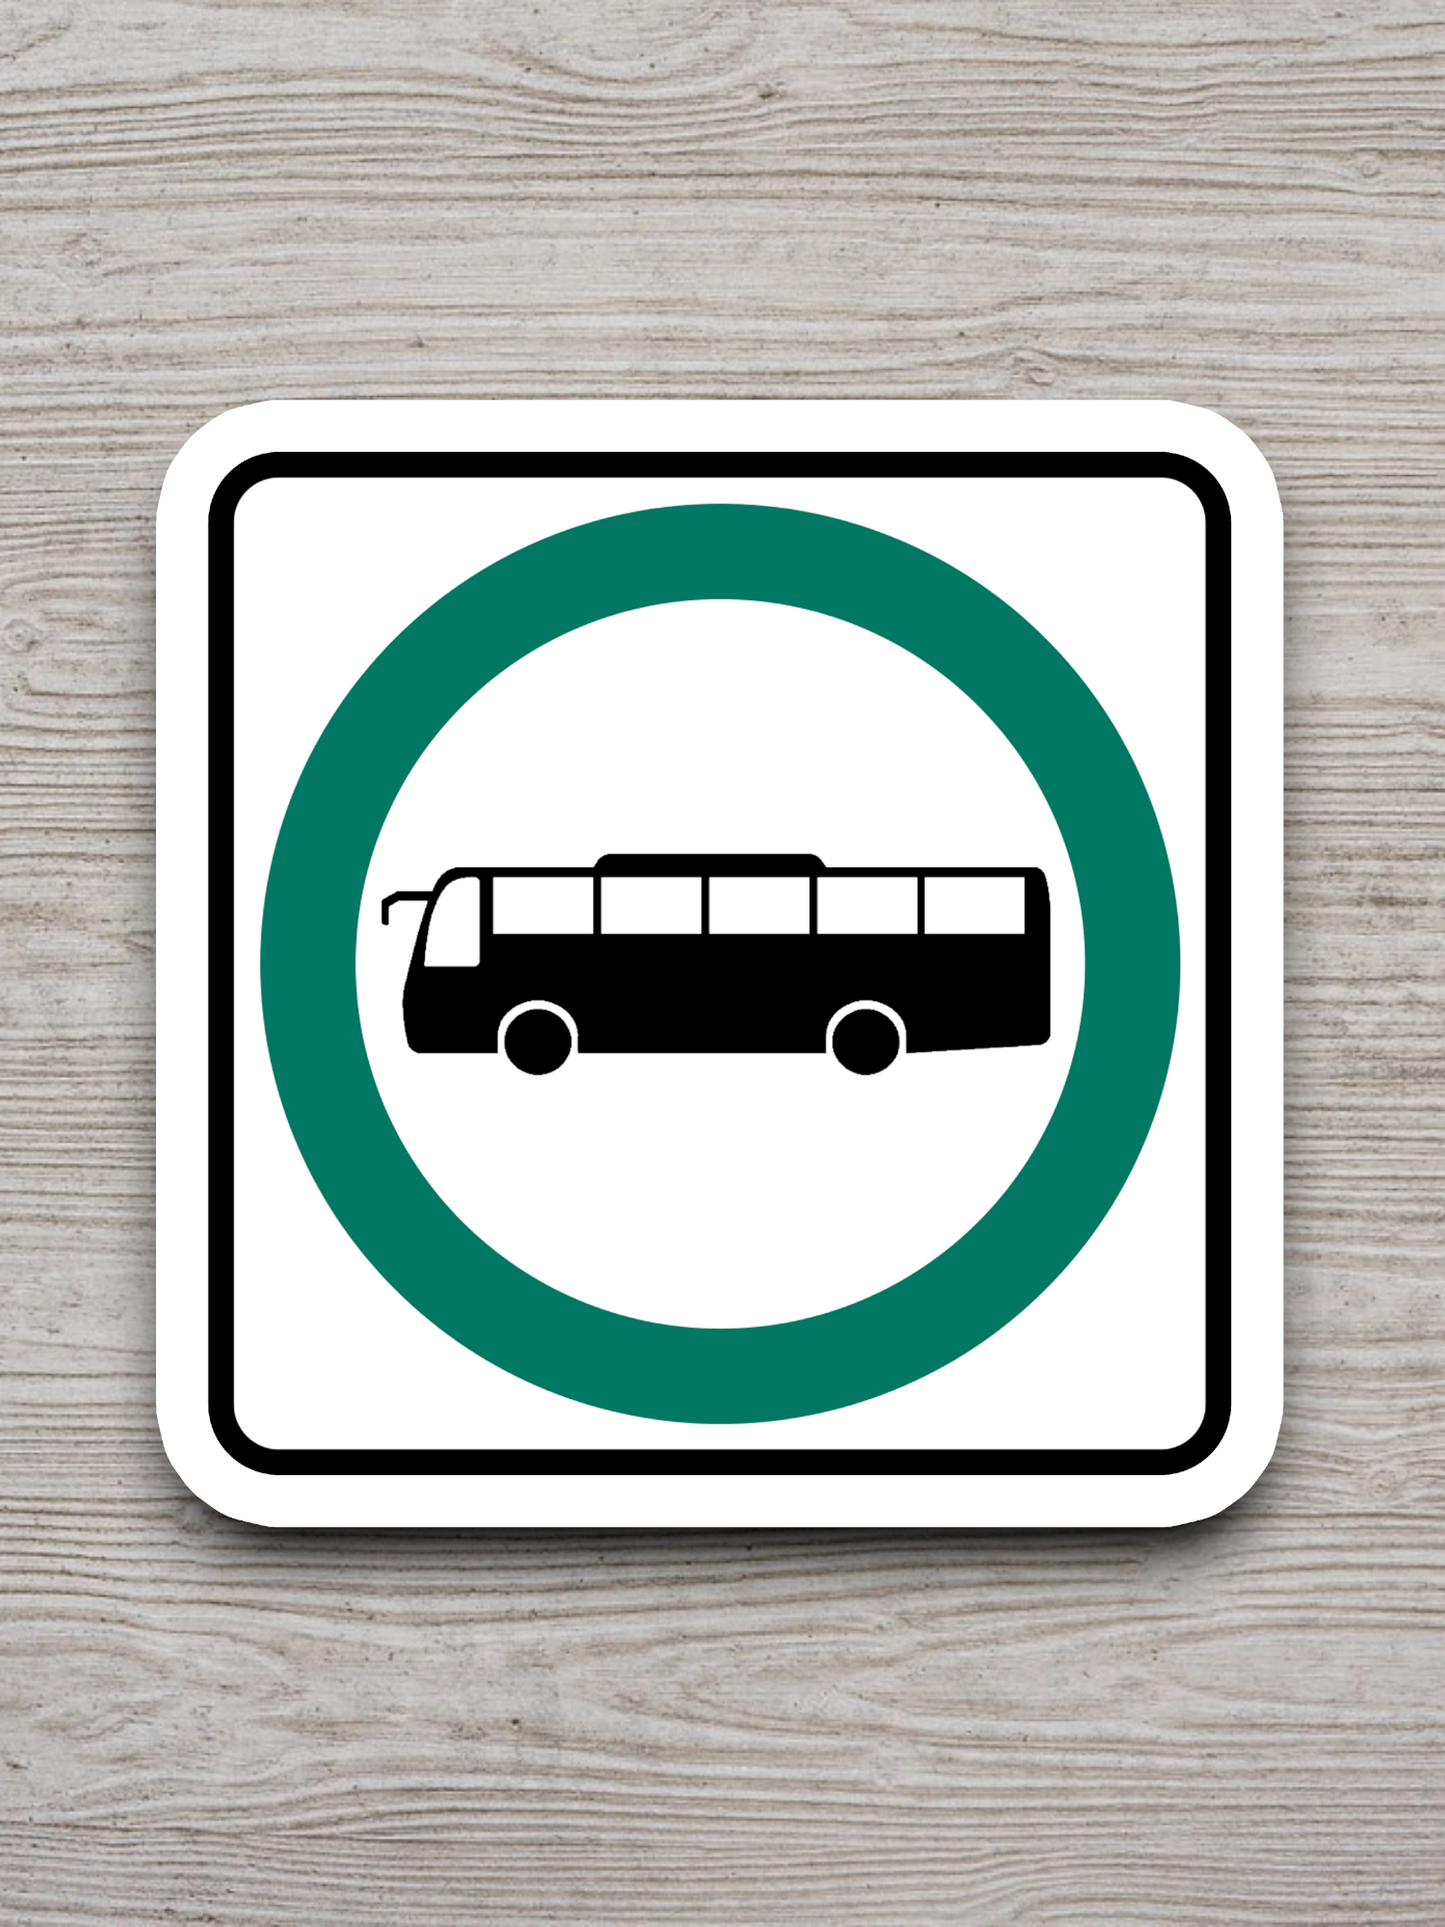 Bus Road Sign Sticker